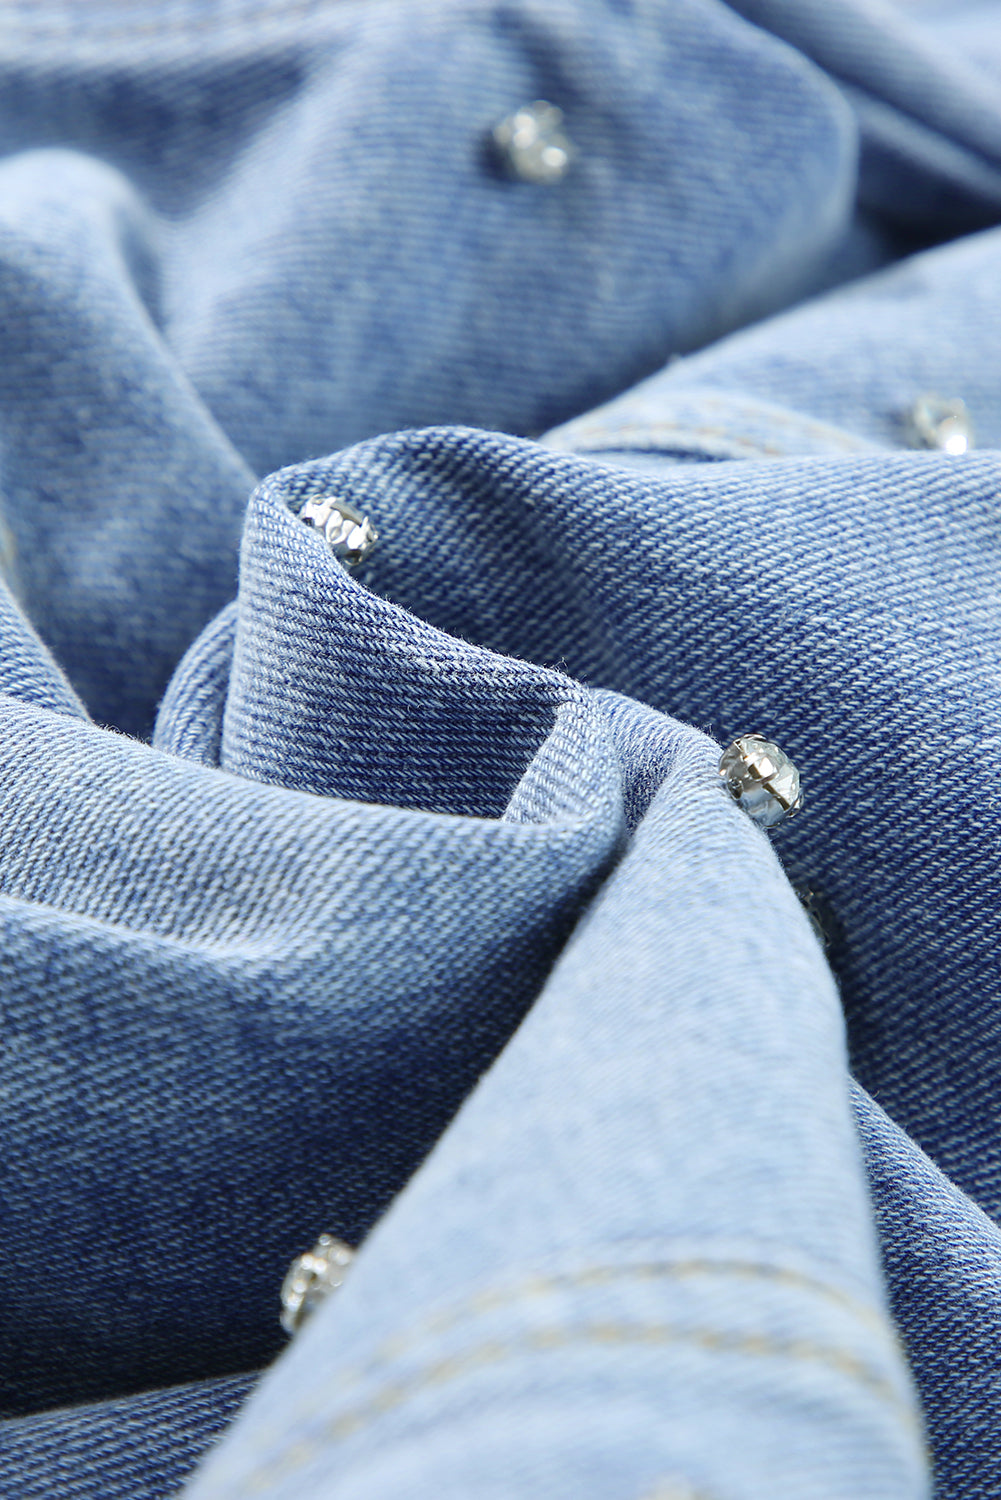 Veste en jean cloutée avec strass bleu brume